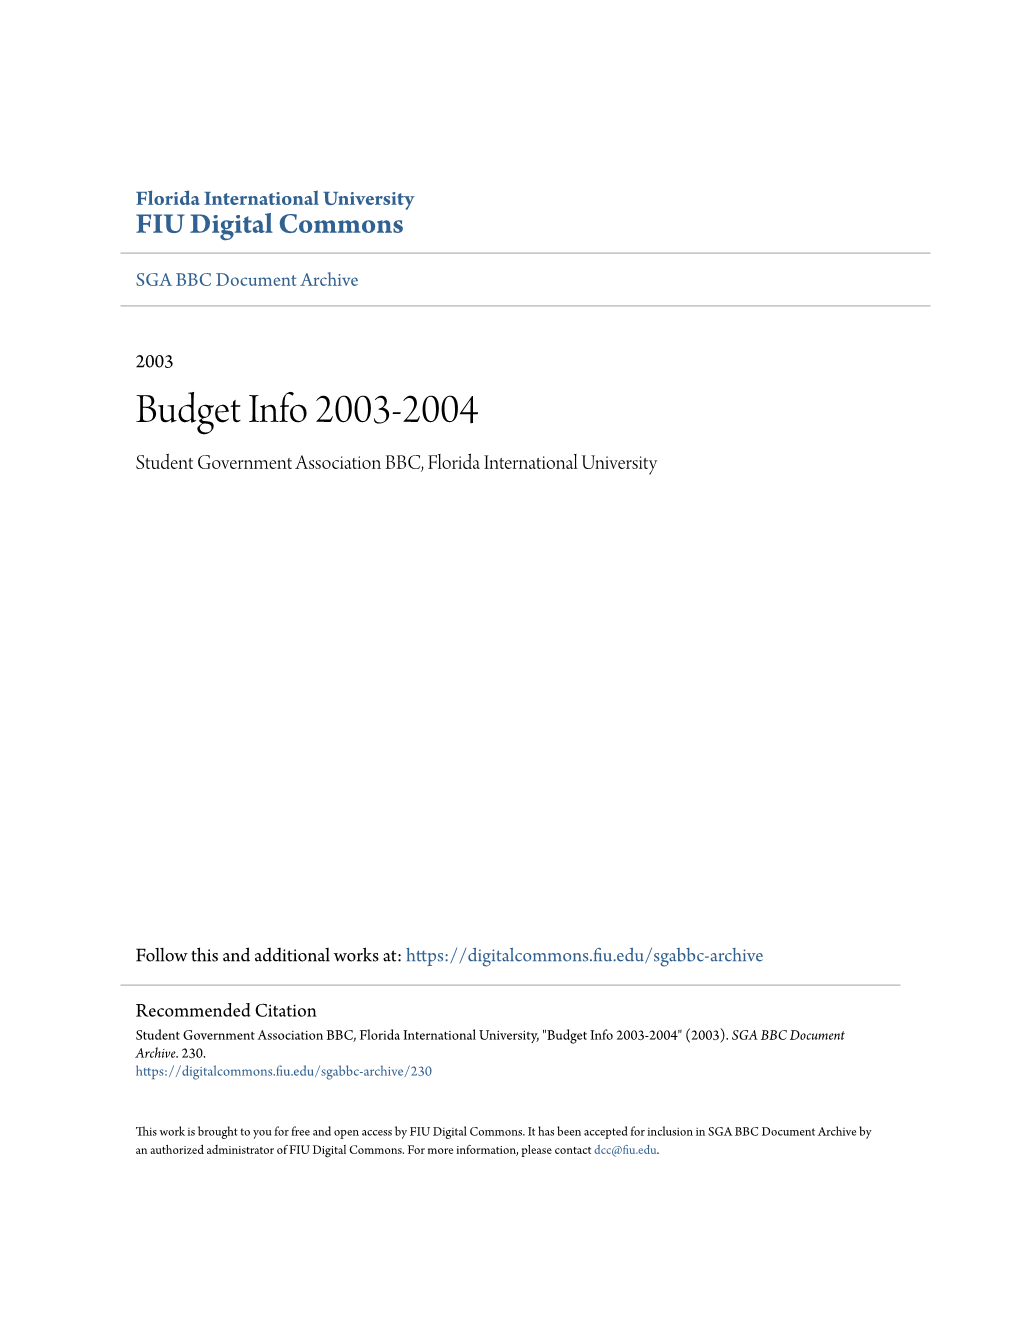 Budget Info 2003-2004 Student Government Association BBC, Florida International University